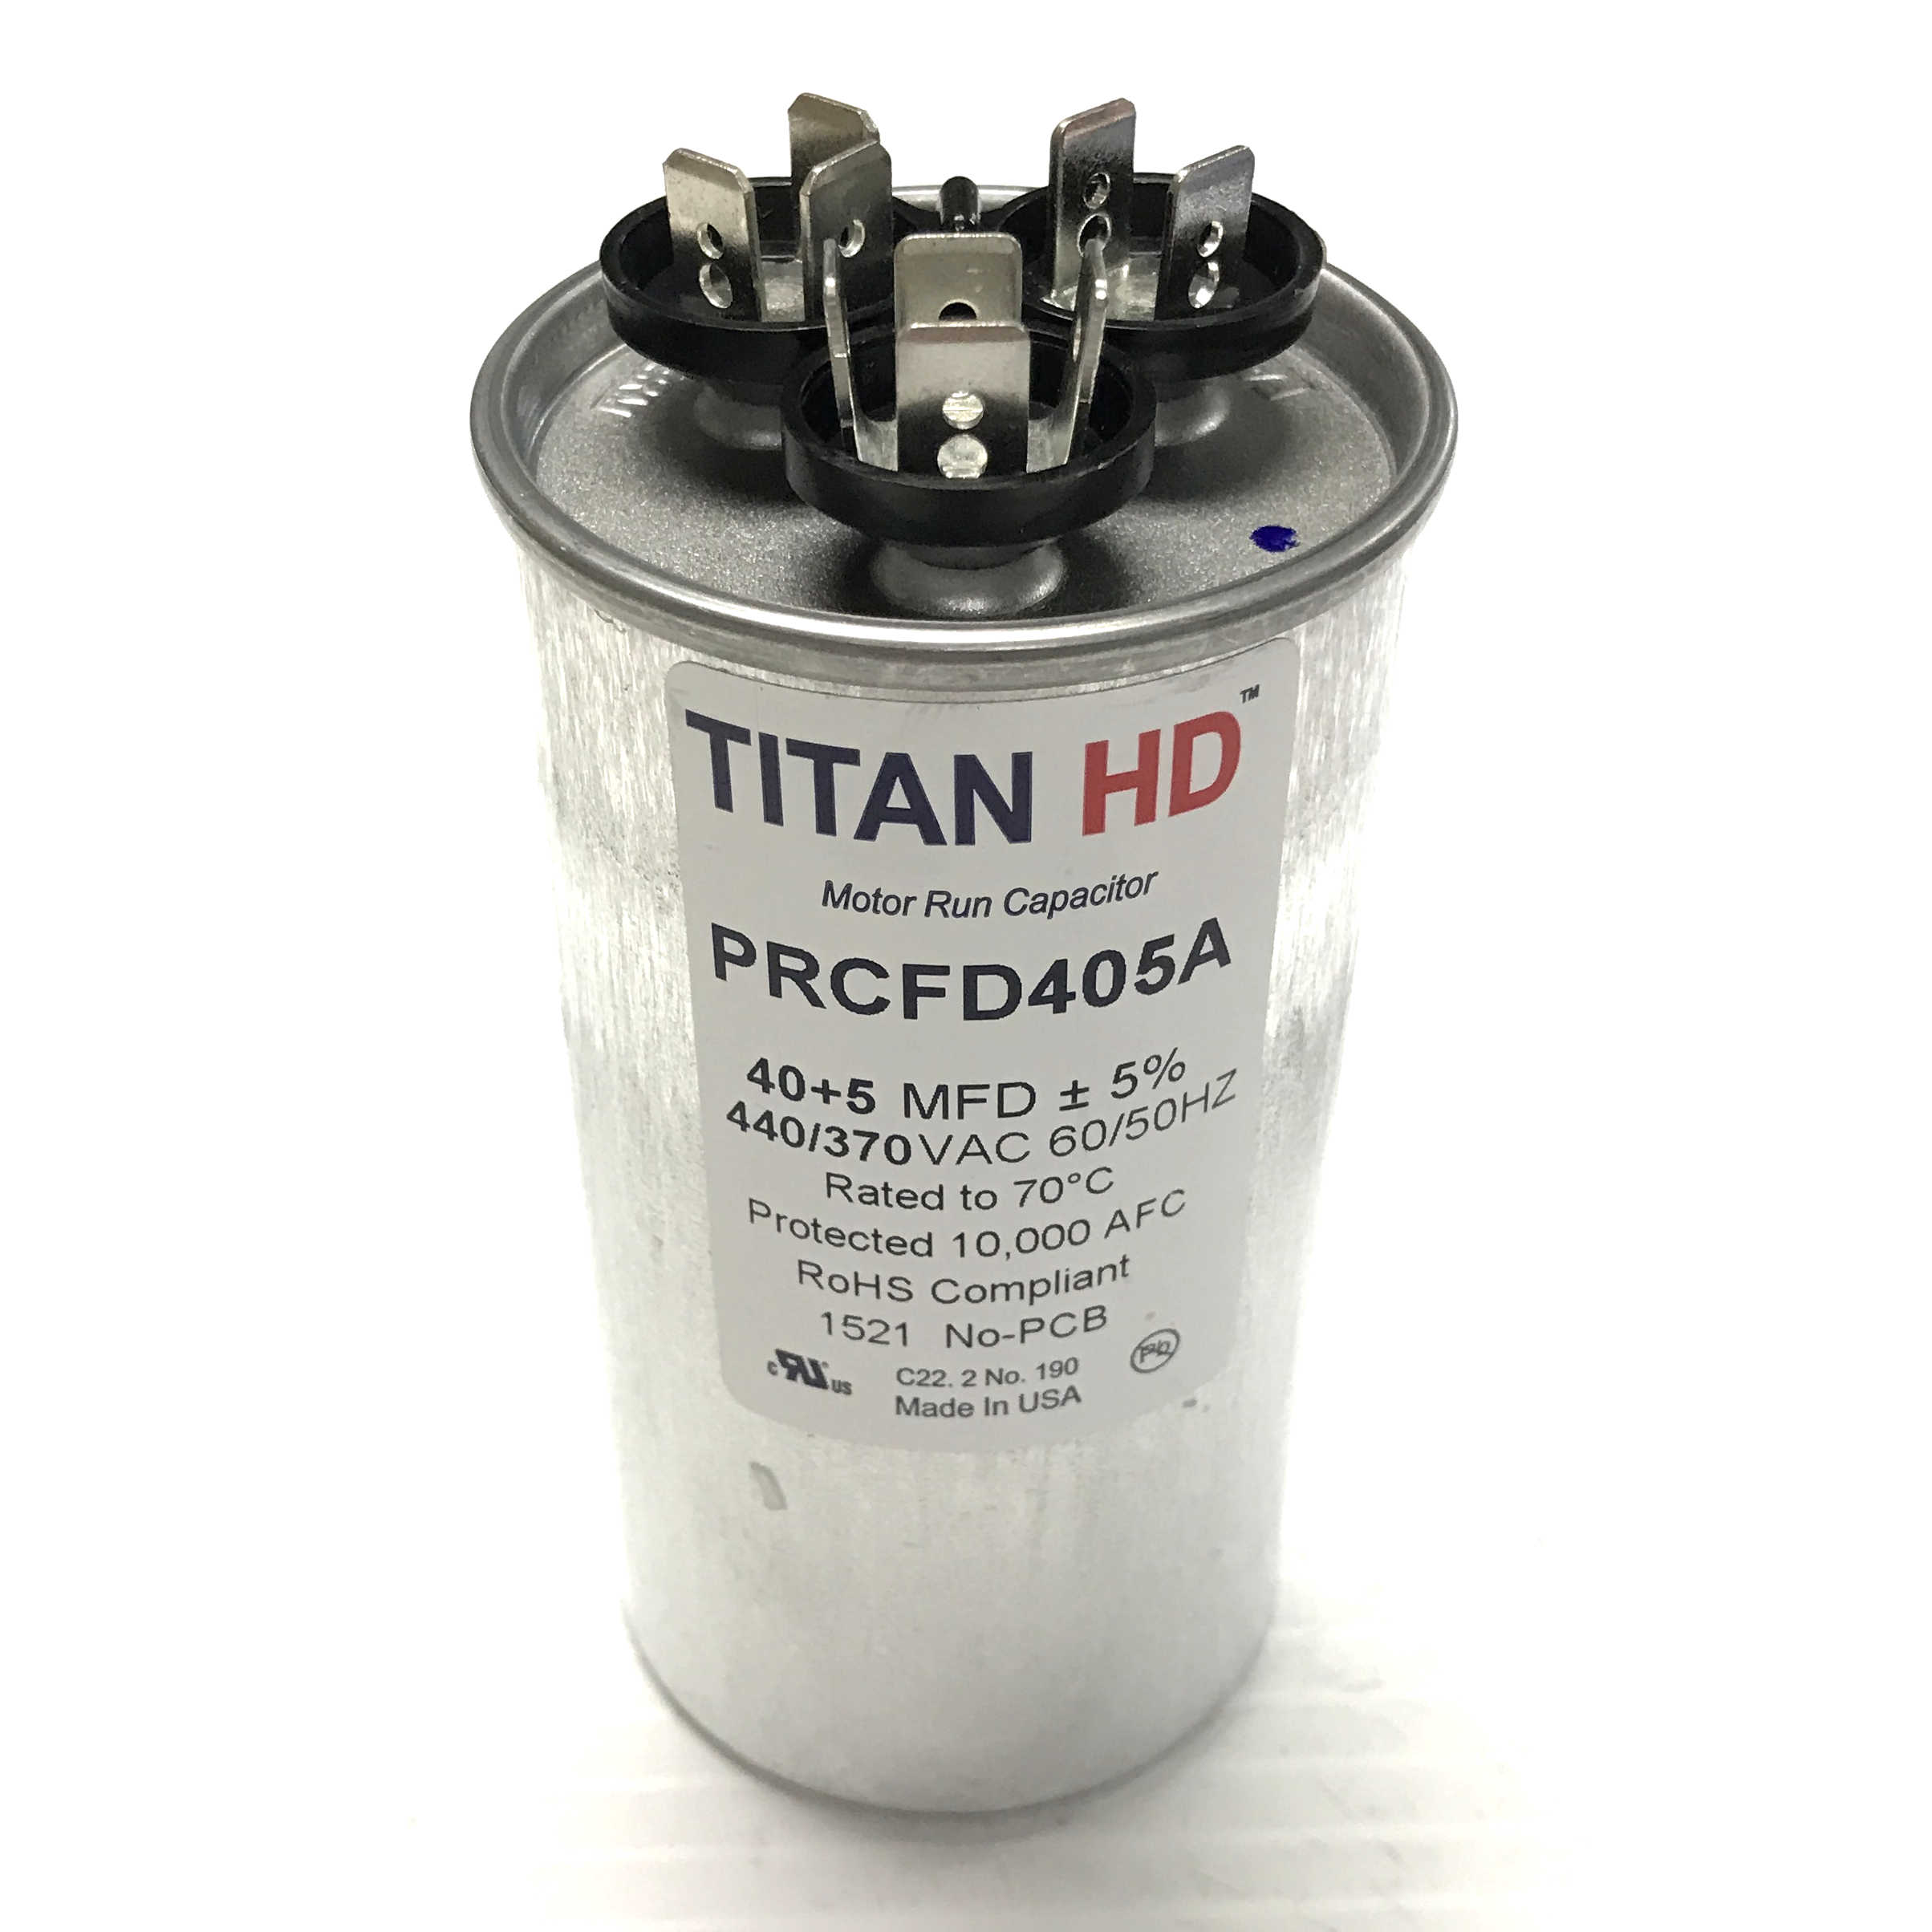 PRCFD405A 40+5 MFD Titan HD Run Capacitor